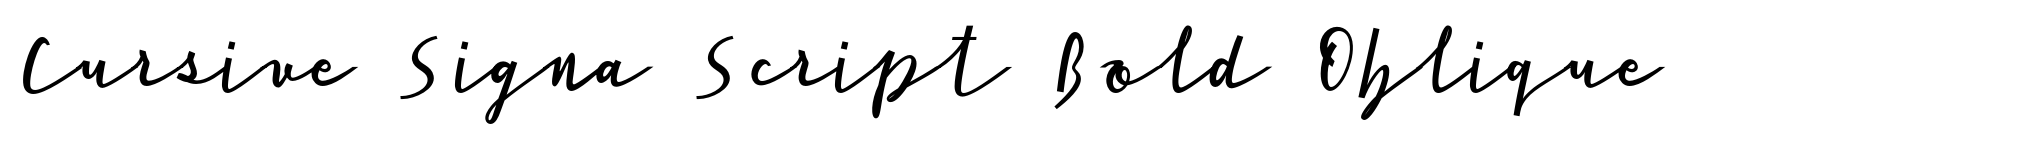 Cursive Signa Script Bold Oblique image